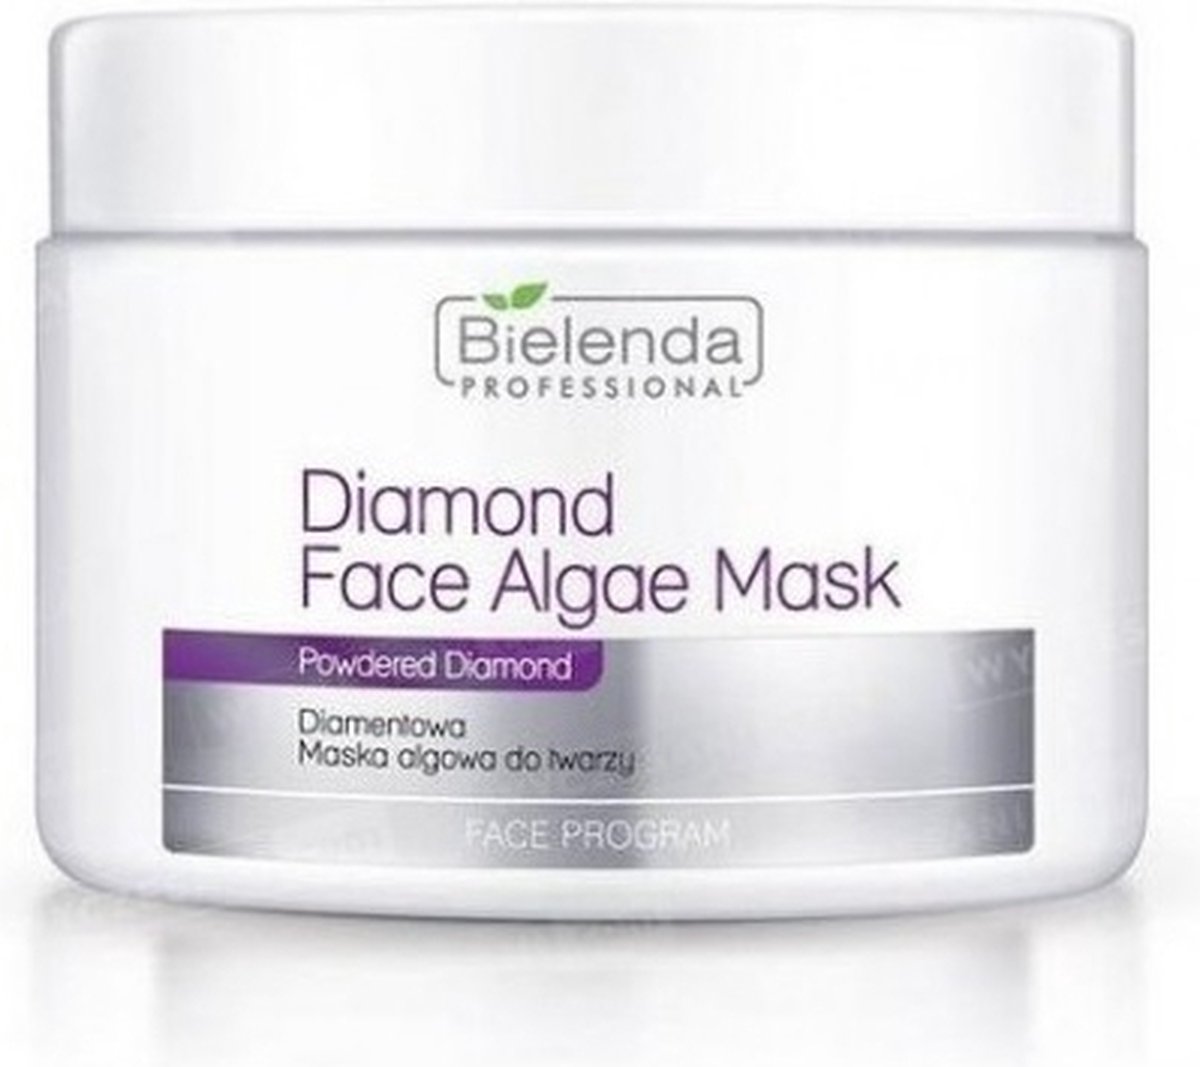 Bielenda Professional - Face Program Diamond Face Algae Mask Diamond Face Mask 190G